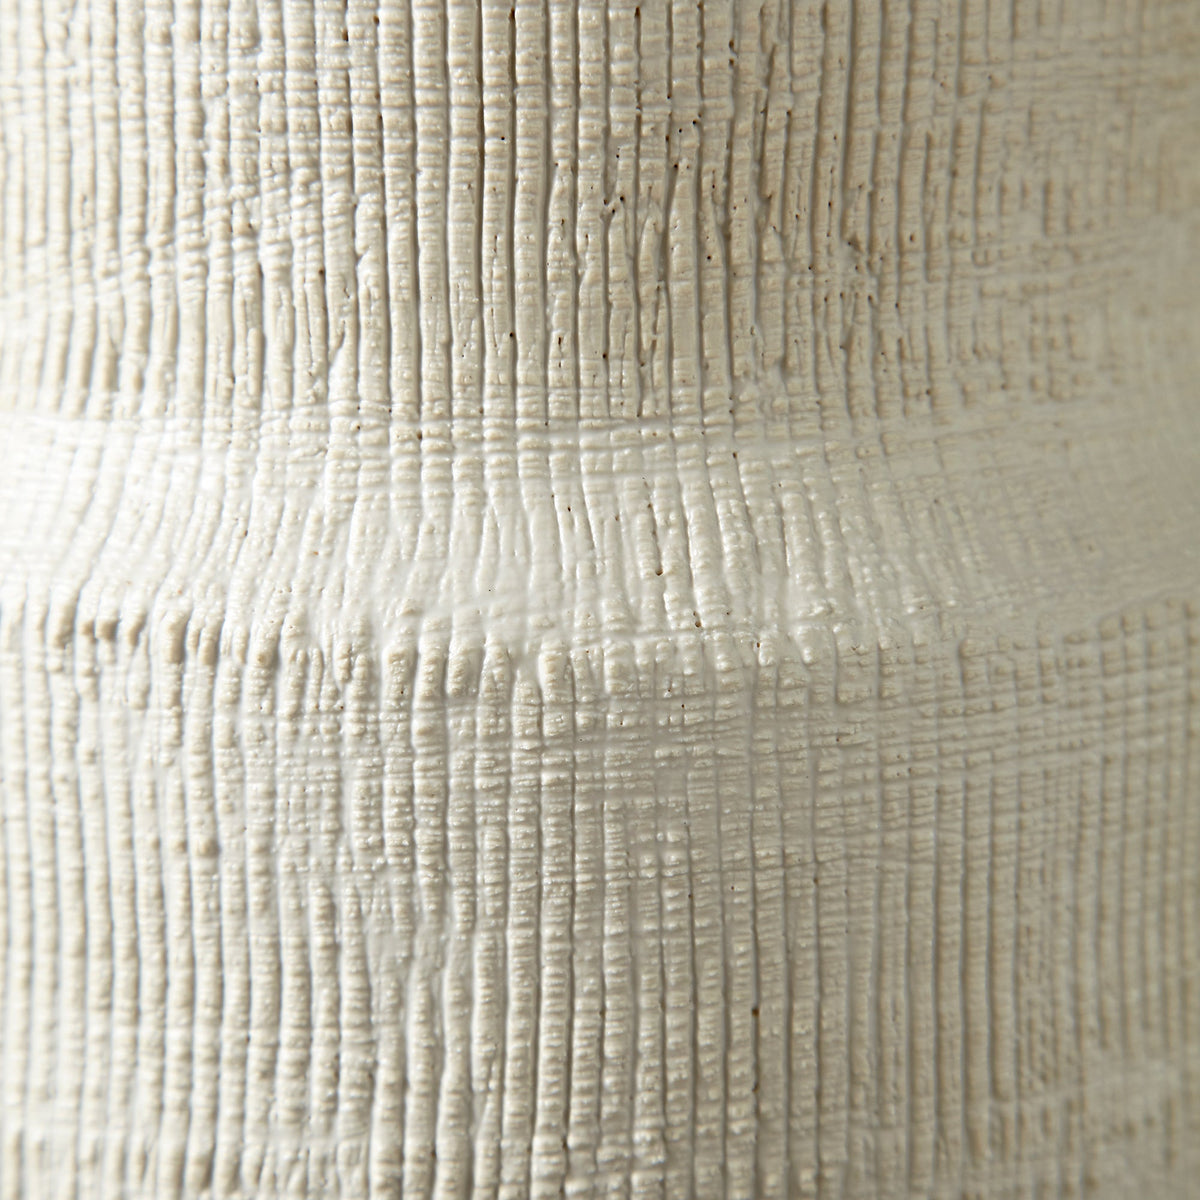 Leela Vase | White-Medium by Cyan